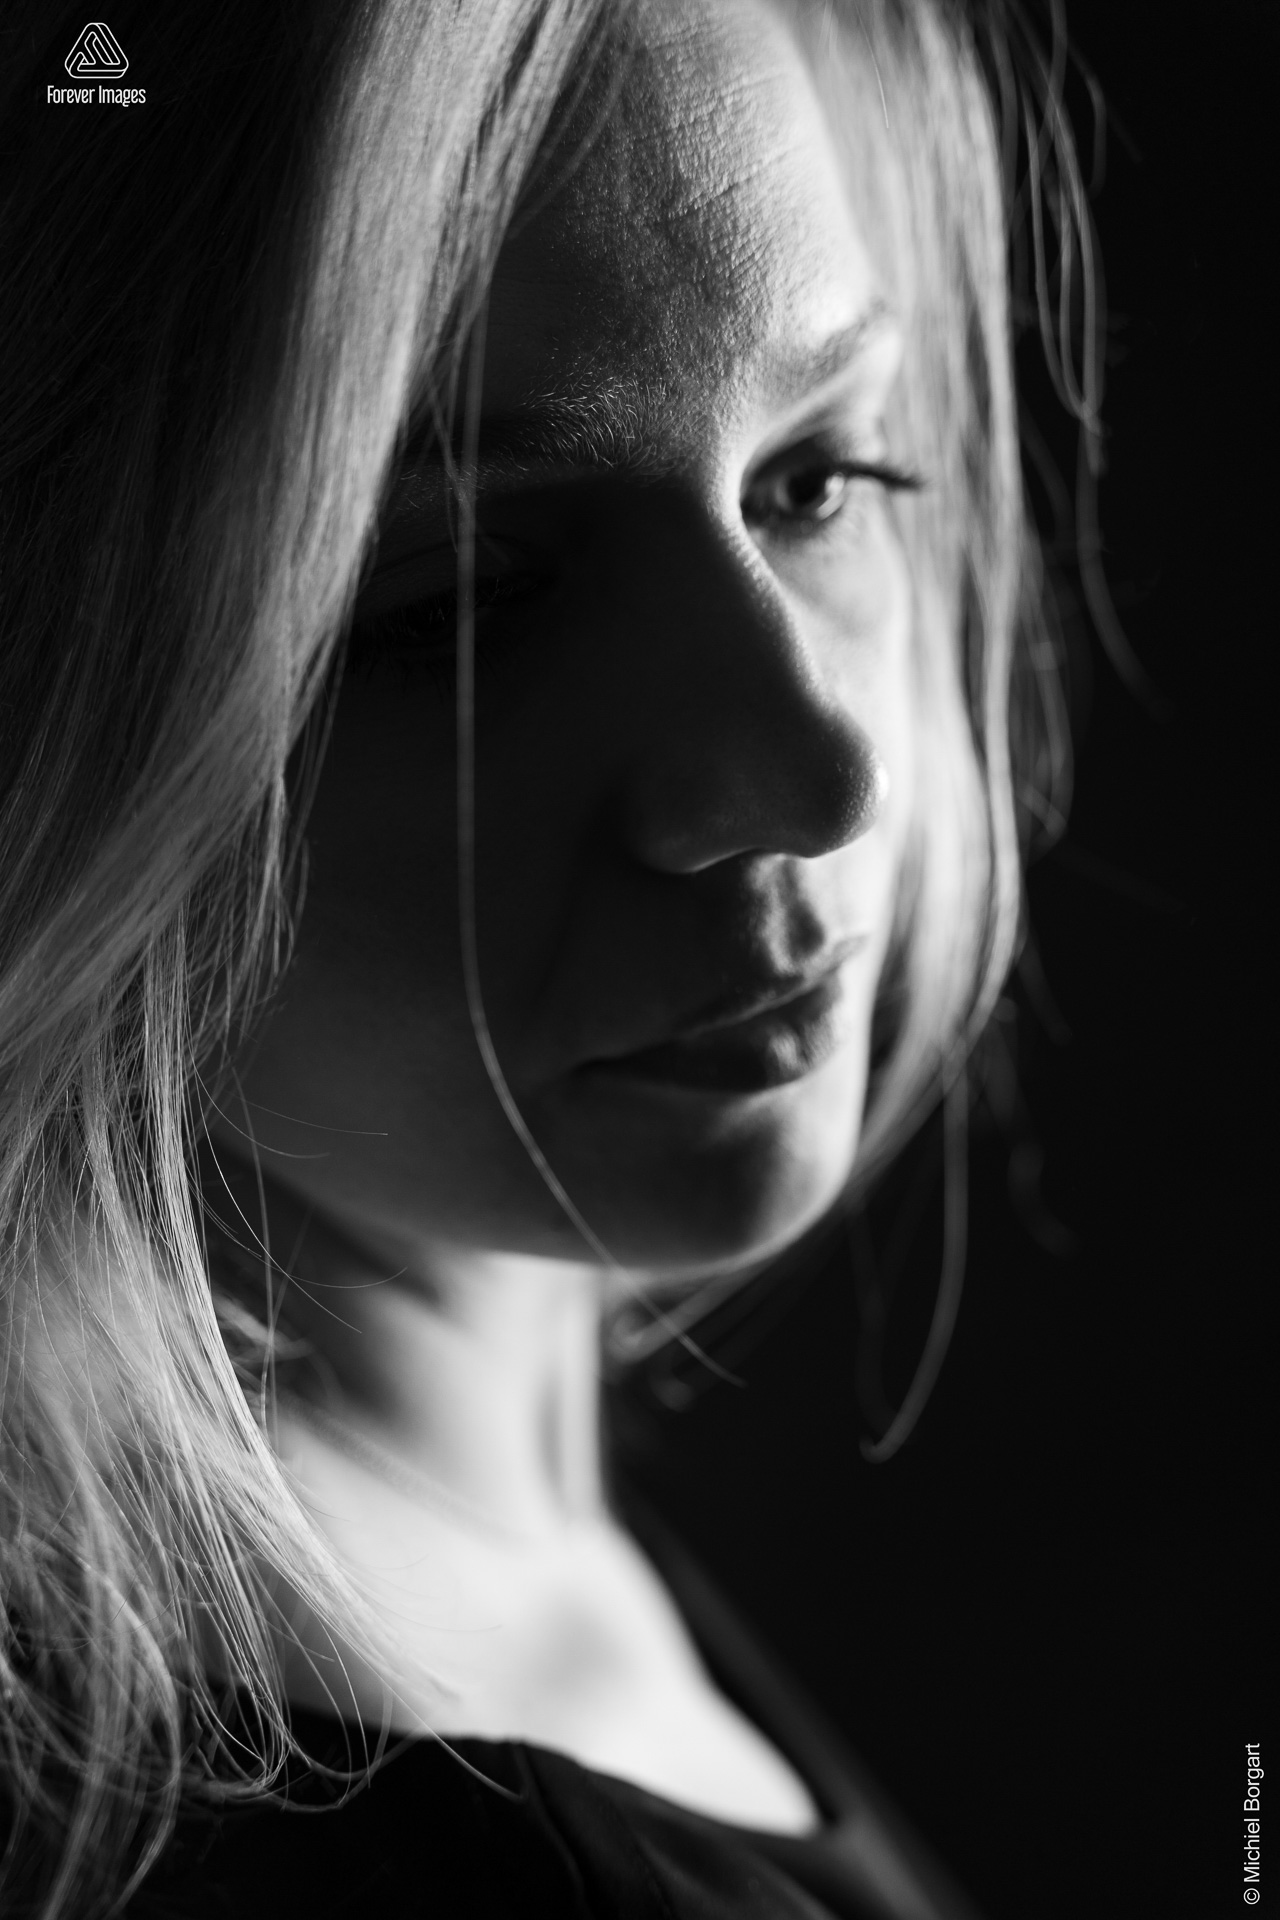 Portretfoto zwart-wit low key jonge dame met zwart jurkje kijkend opzij | Fanziska | Portretfotograaf Michiel Borgart - Forever Images.